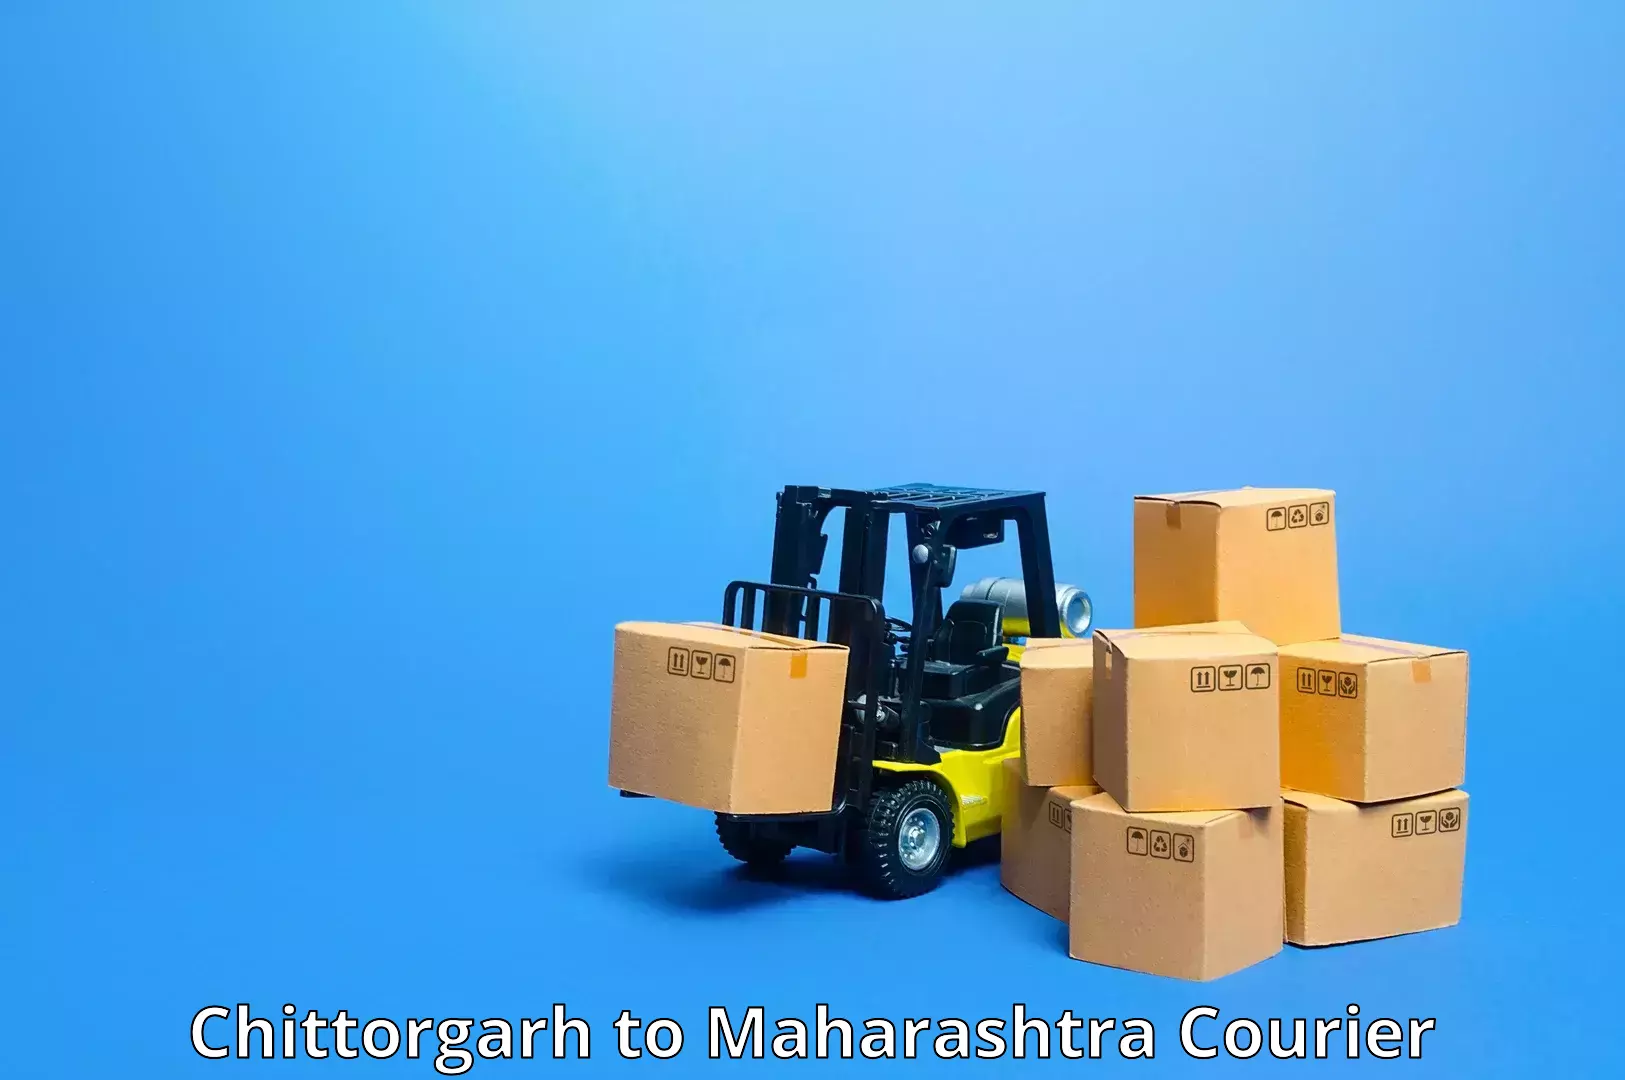 Courier service partnerships Chittorgarh to Maharashtra